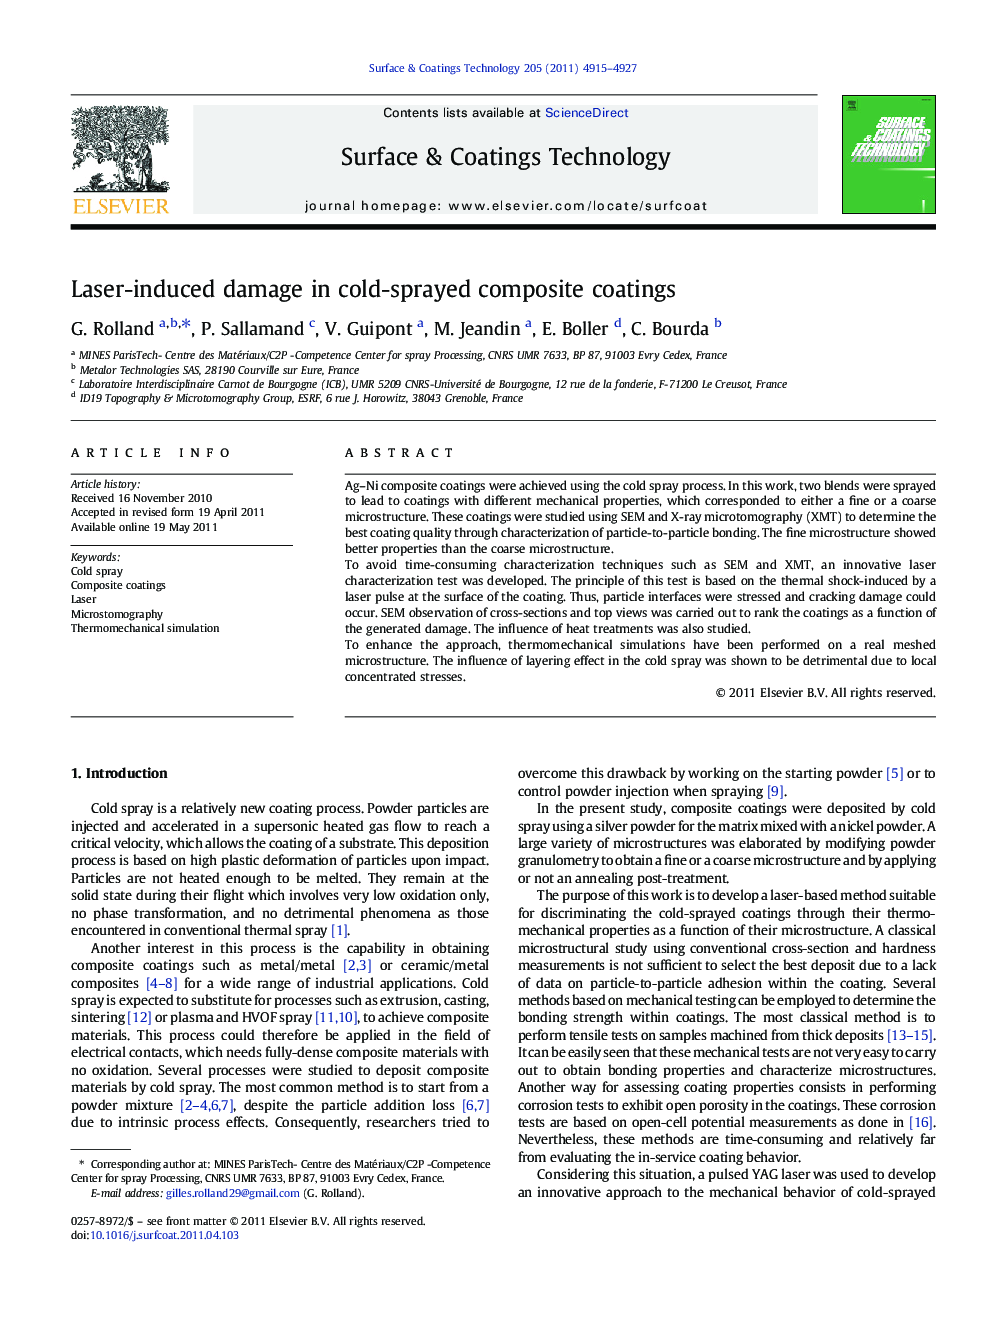 Laser-induced damage in cold-sprayed composite coatings